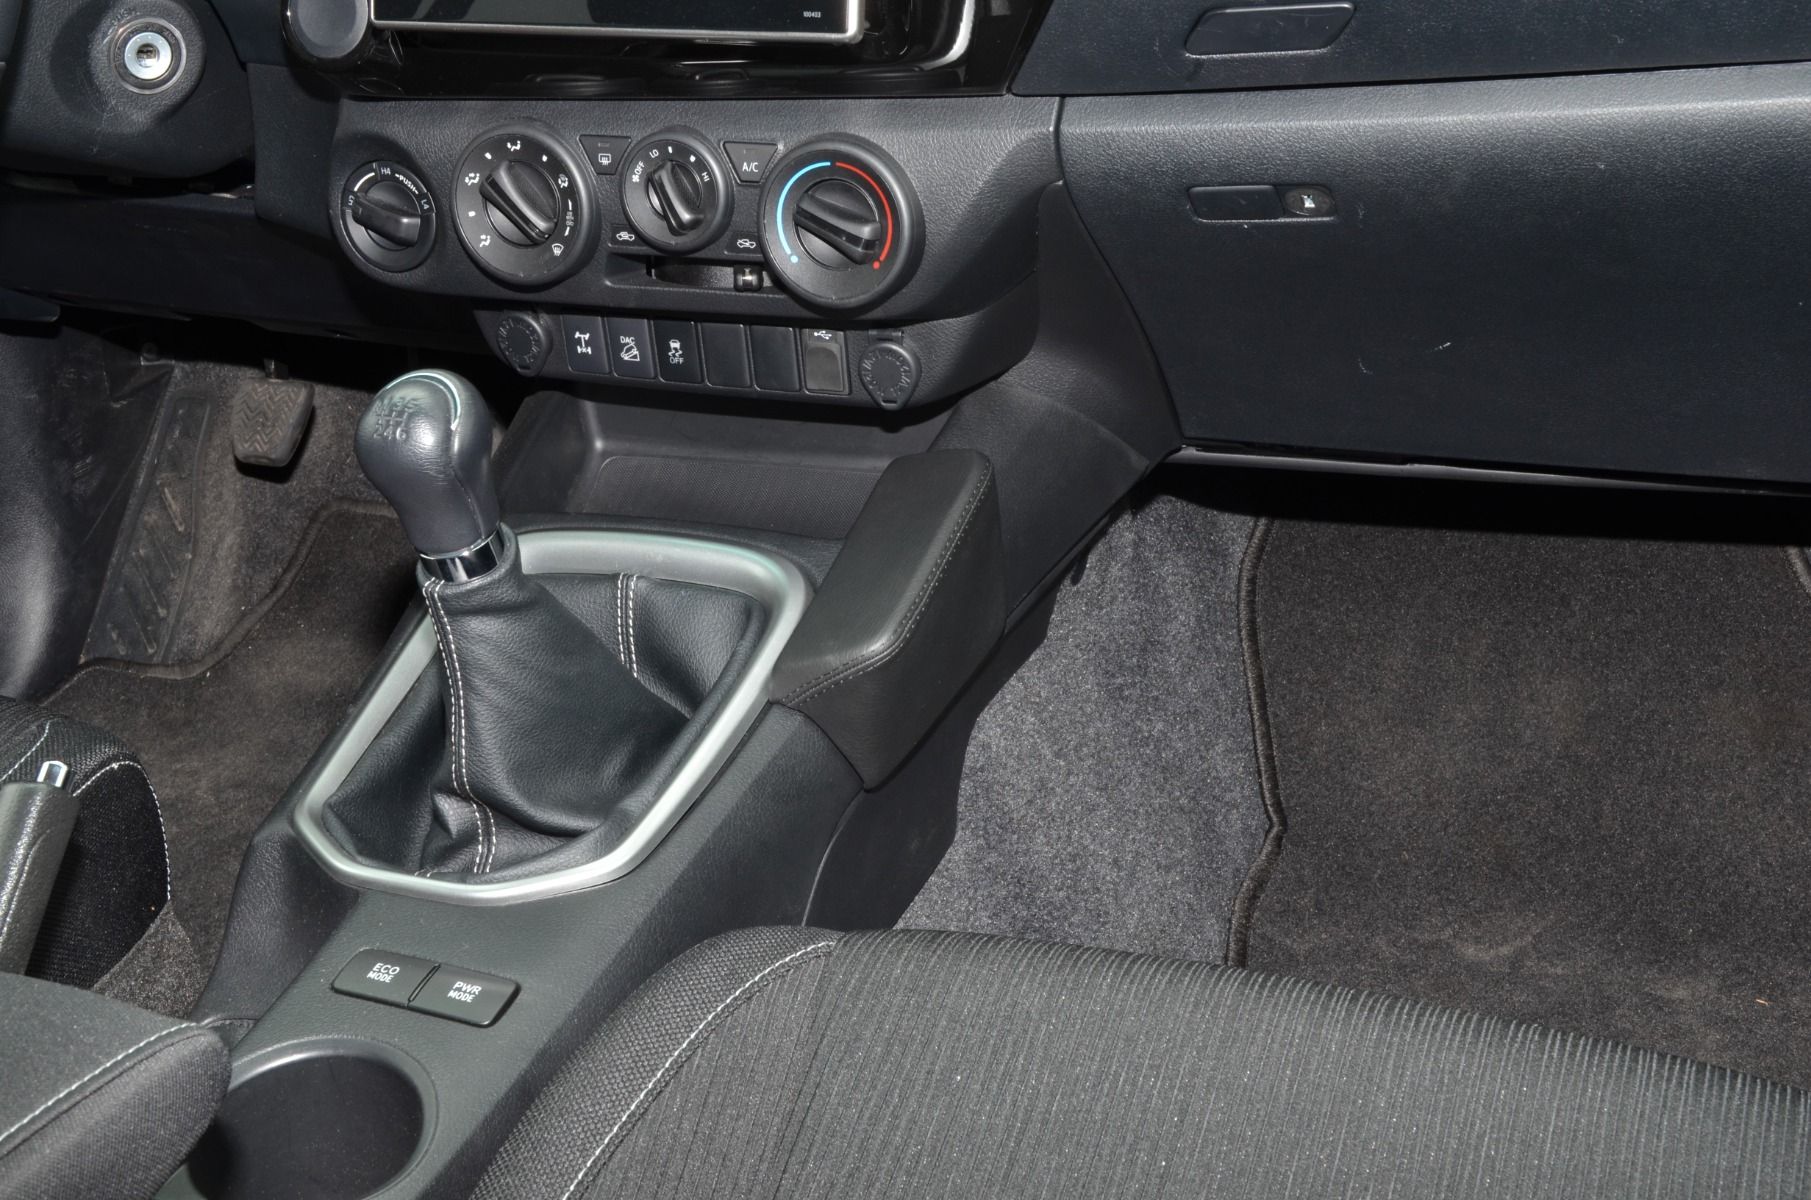 Kuda console Toyota Hilux 2015-